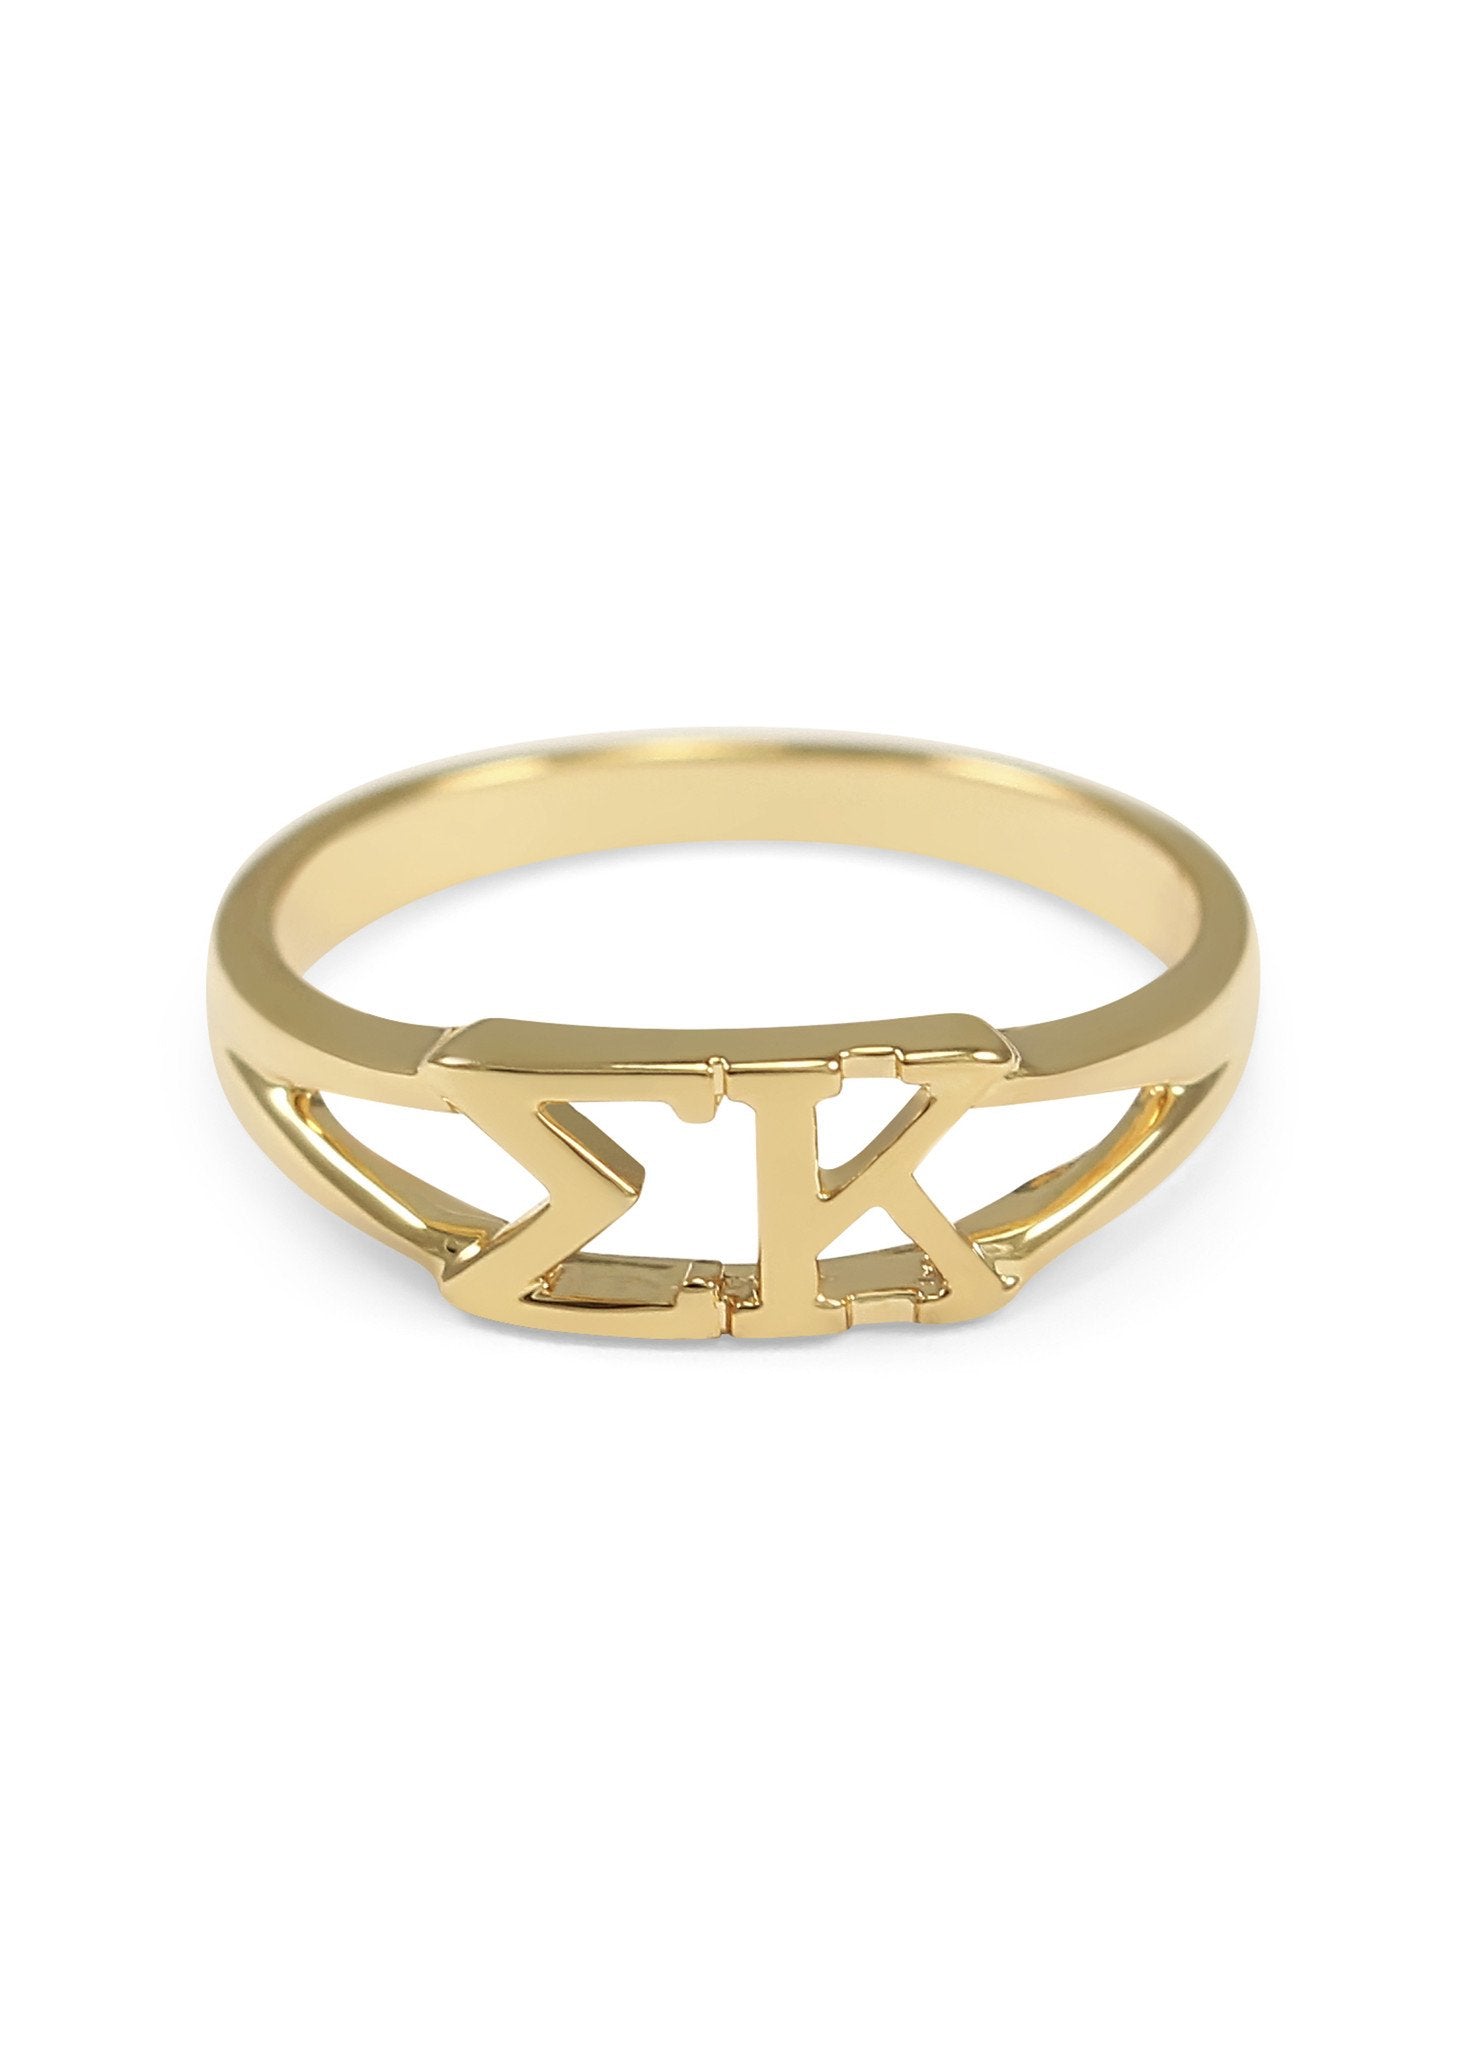 Kappa Phi Gold Jewelry | Buy Kappa Phi Gold Rings Online - The Collegiate  Standard